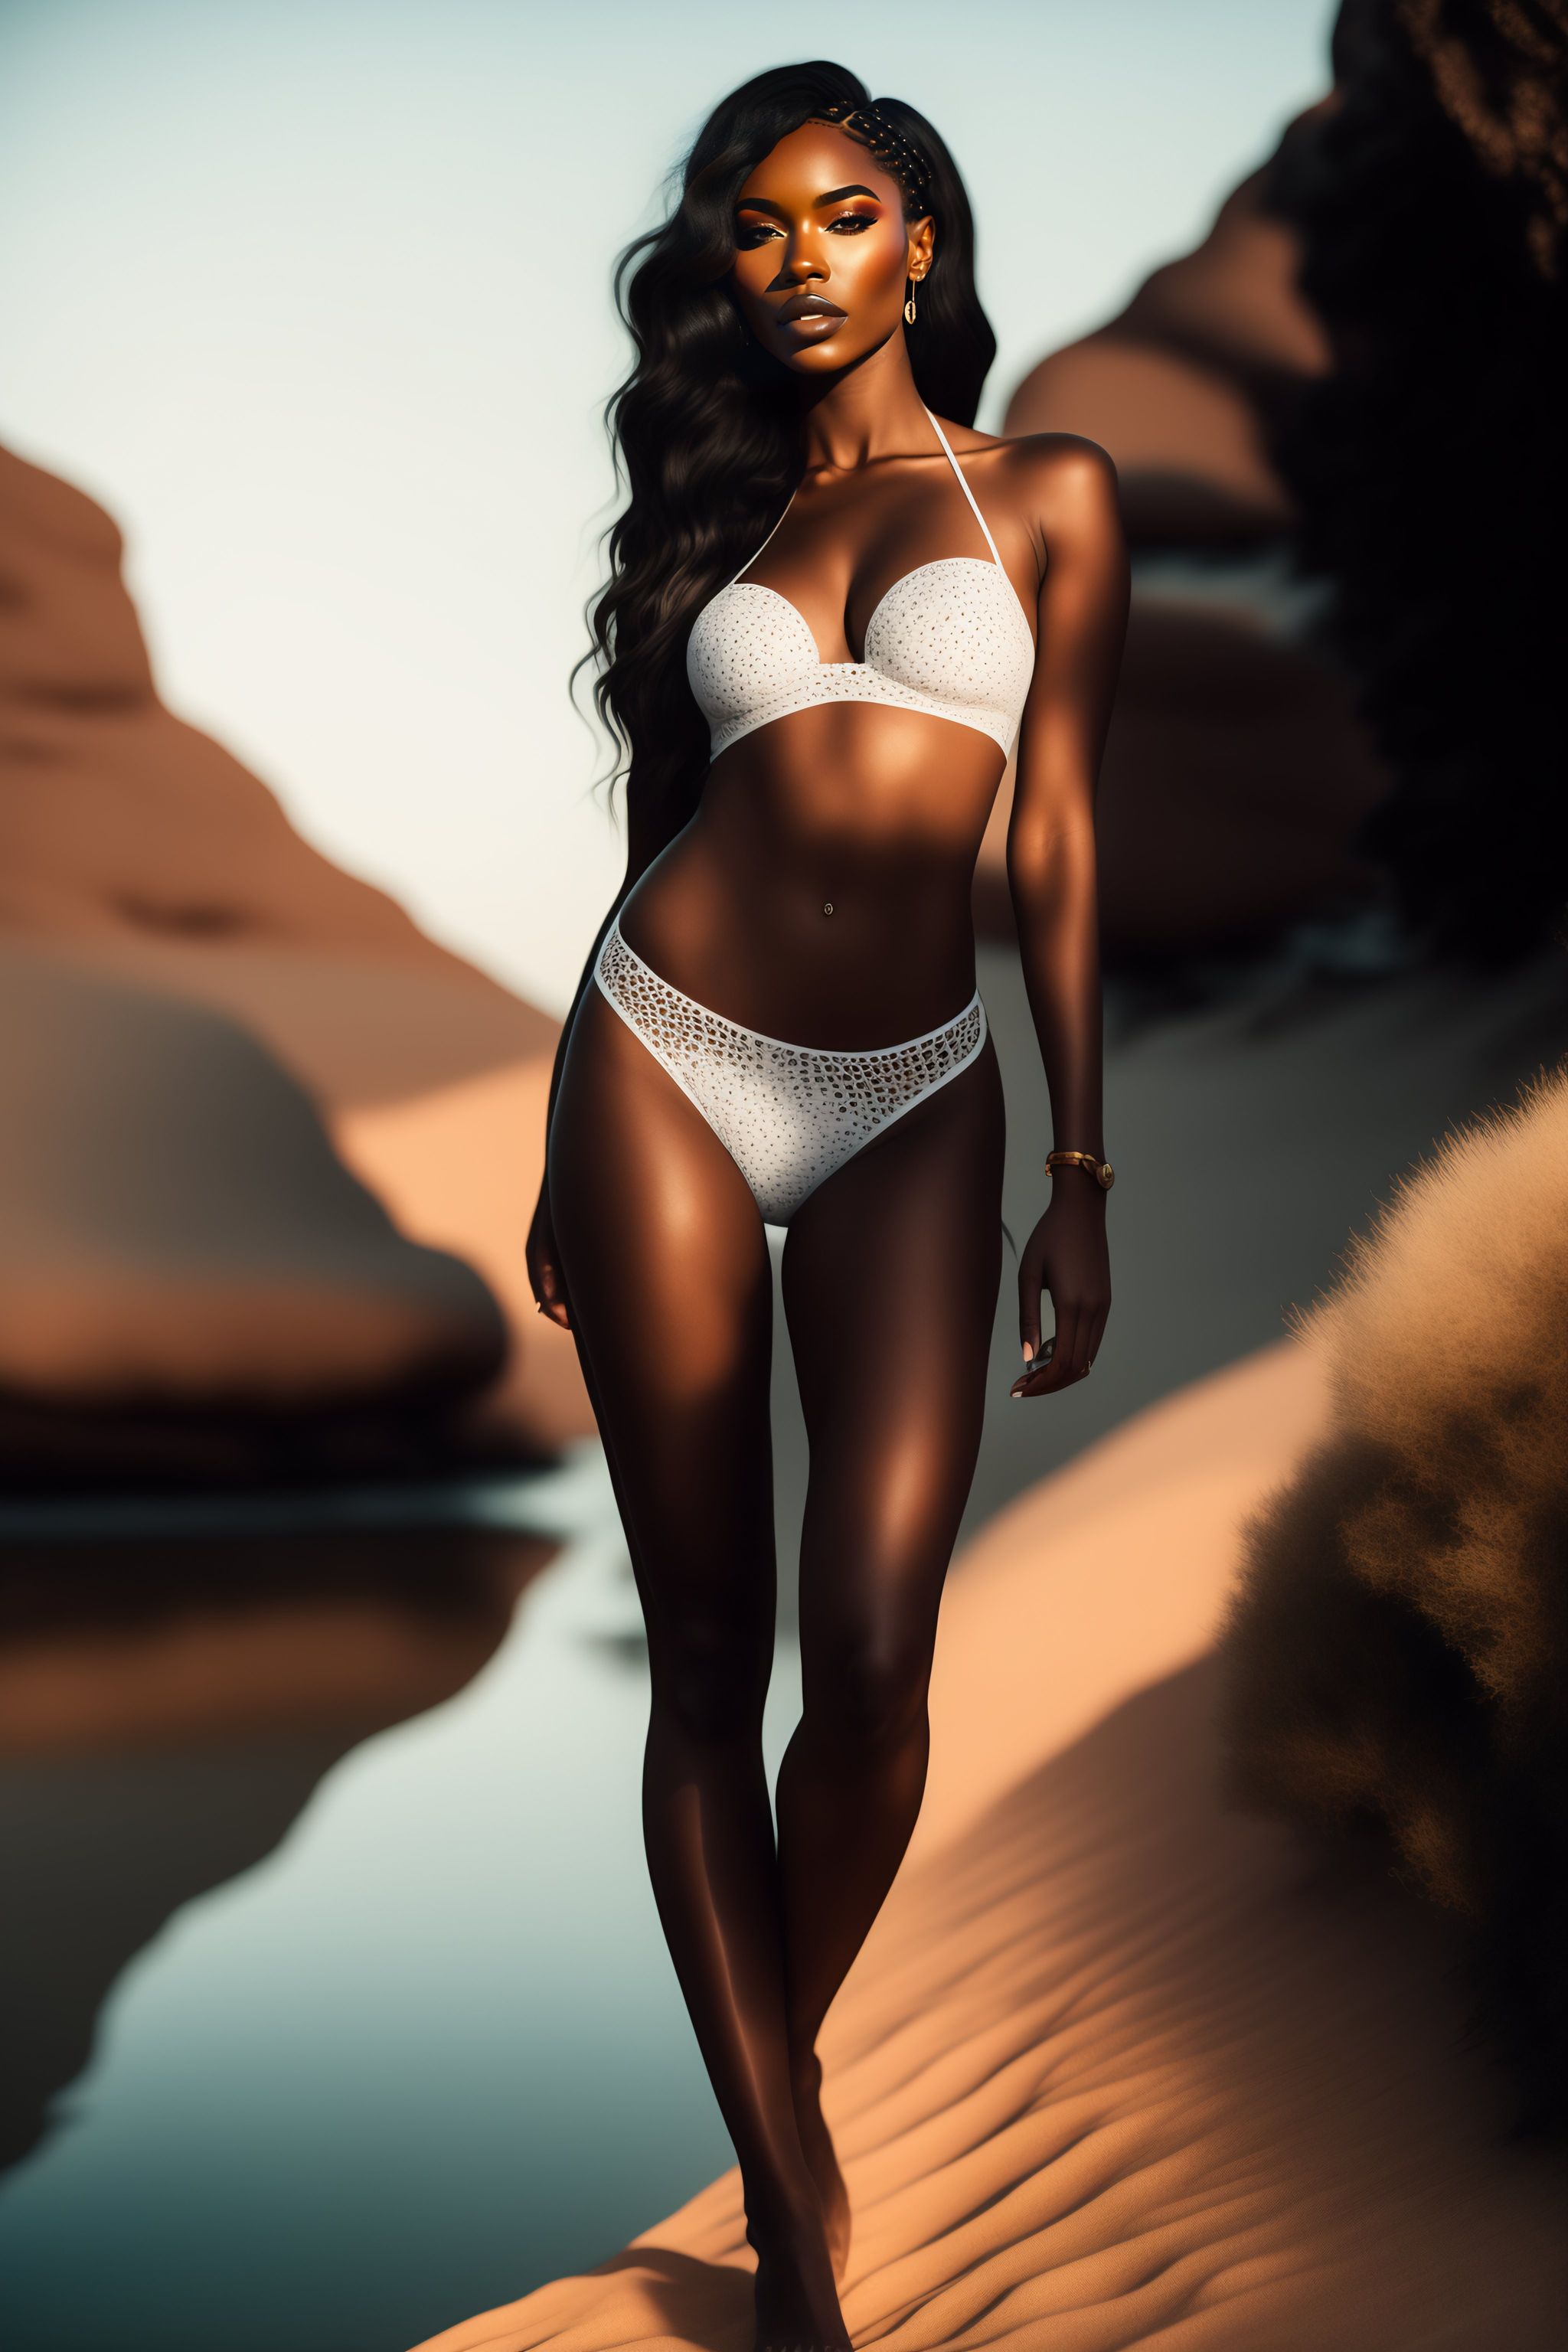 Lexica - Black woman, white spots on the skin, in a lace bikini, long hair,  sports body, full length, legs, high quality, high details.